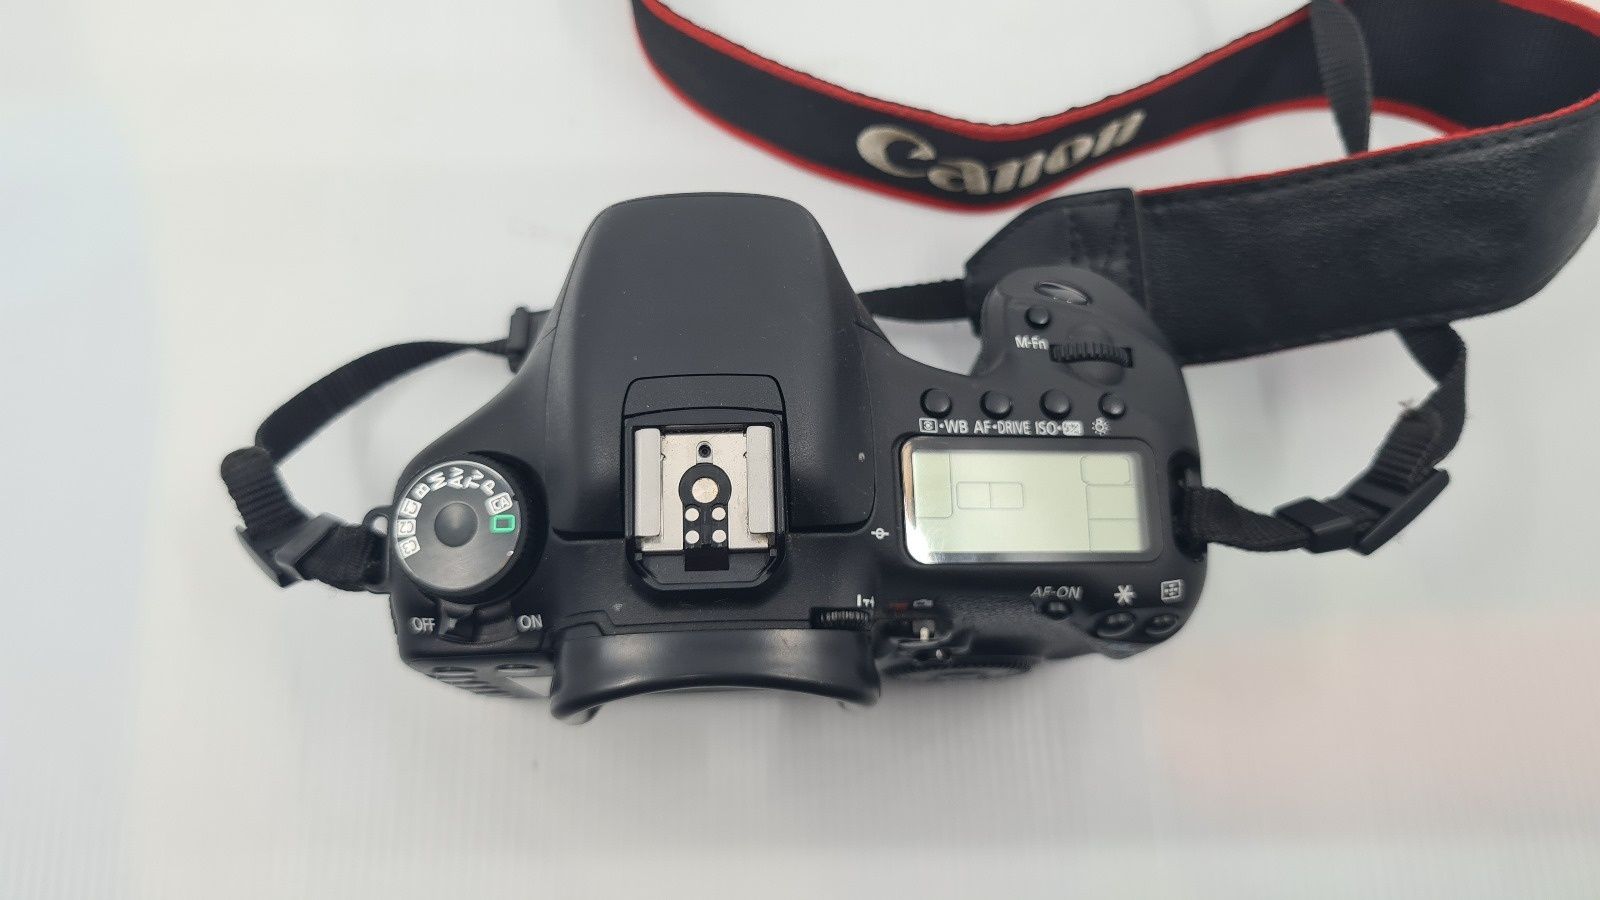 Camera DSLR Canon 7D Mark I body only